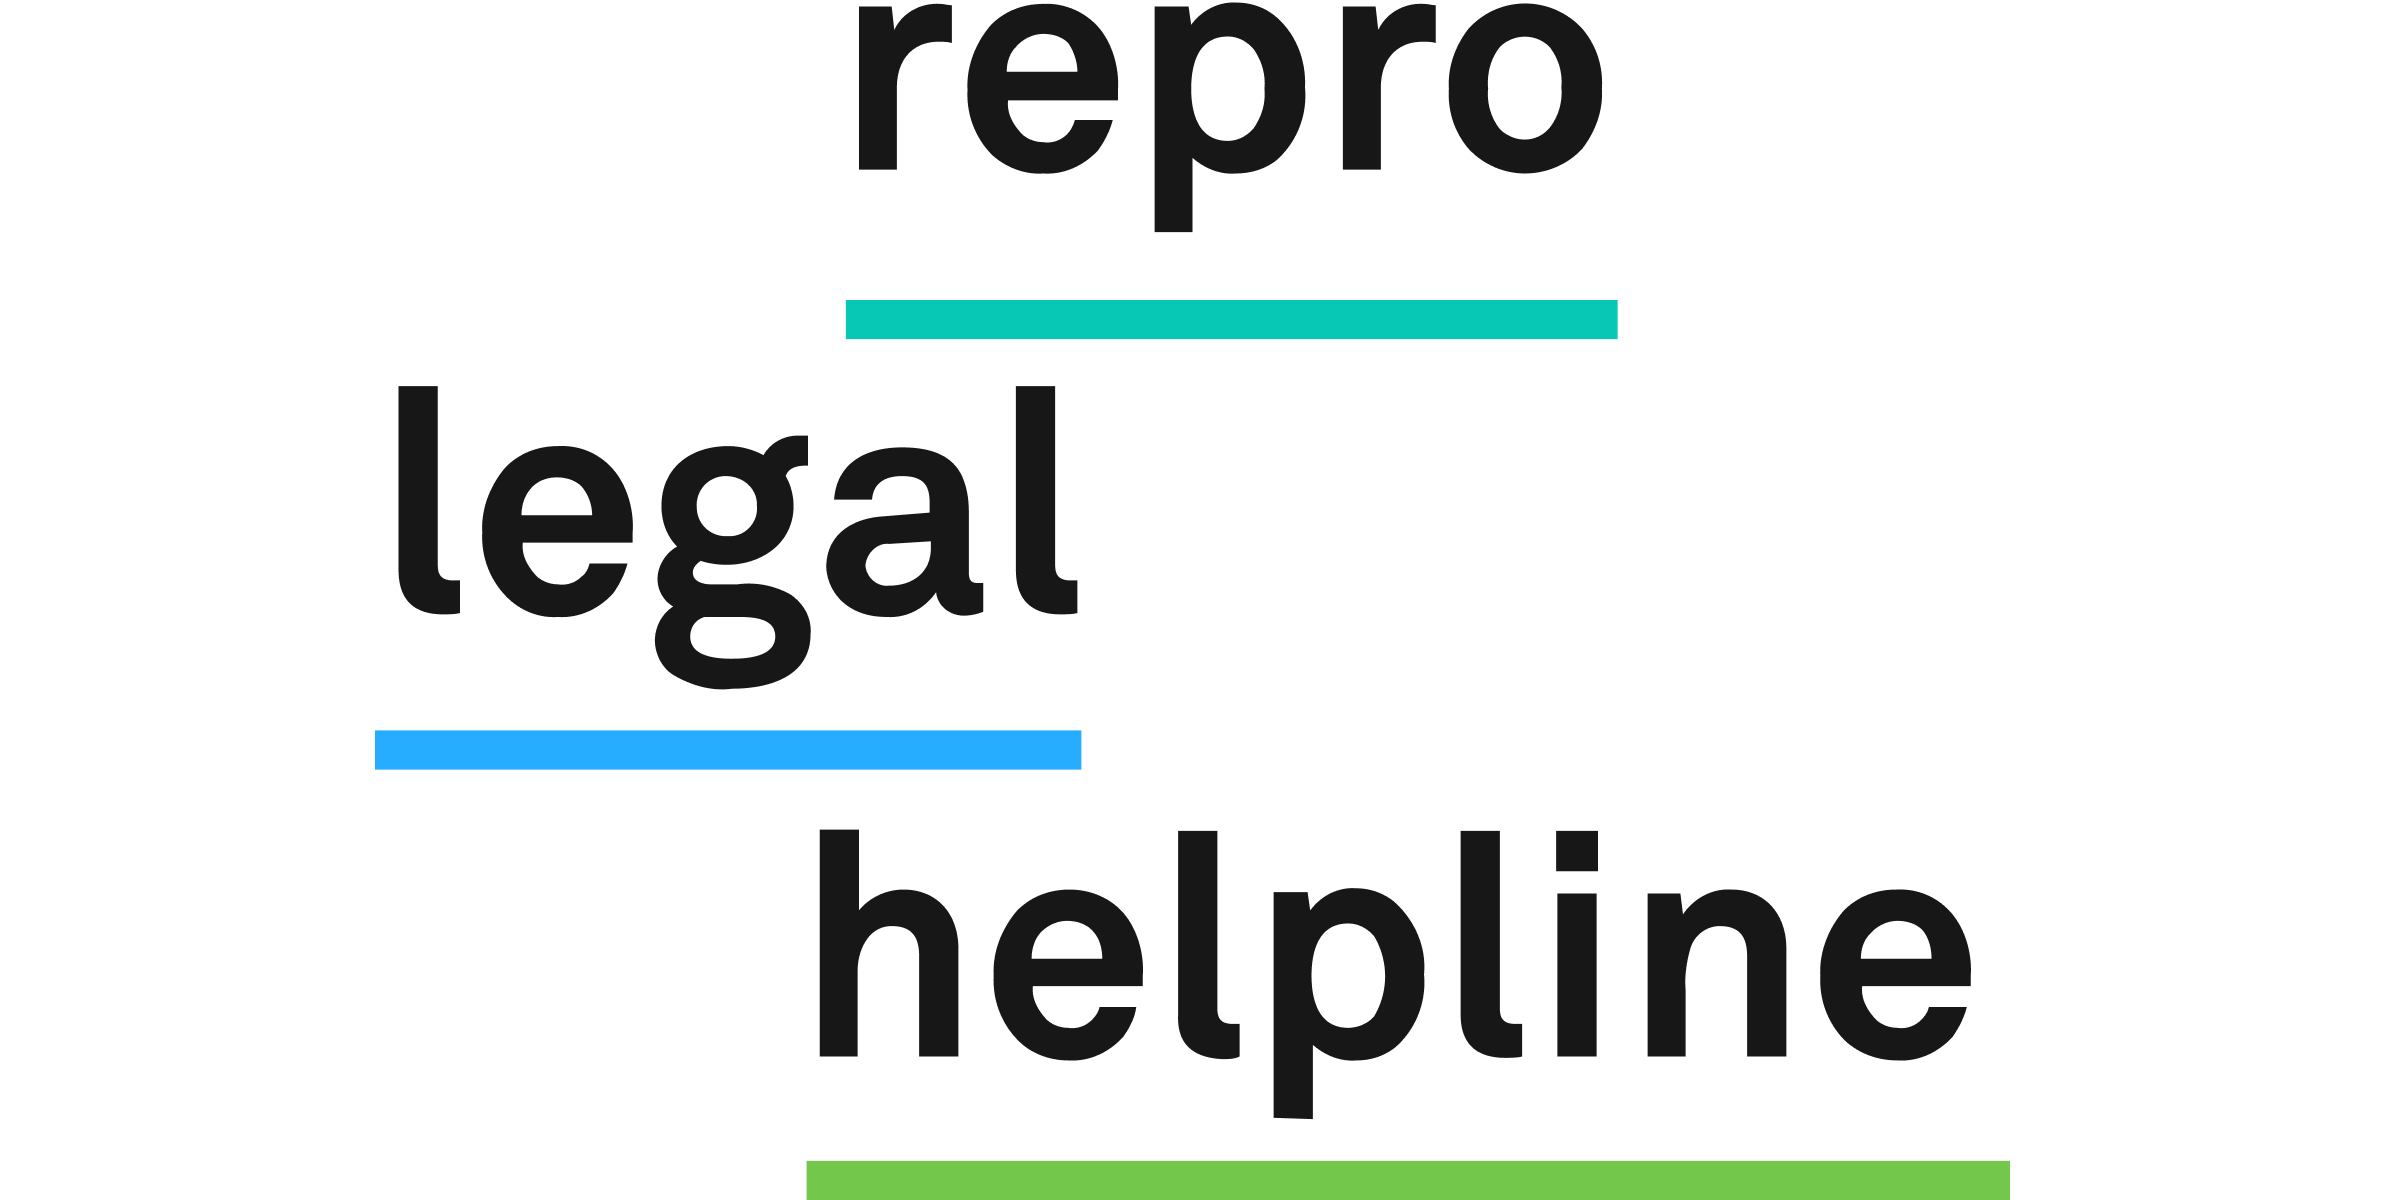 Repro Legal Helpline